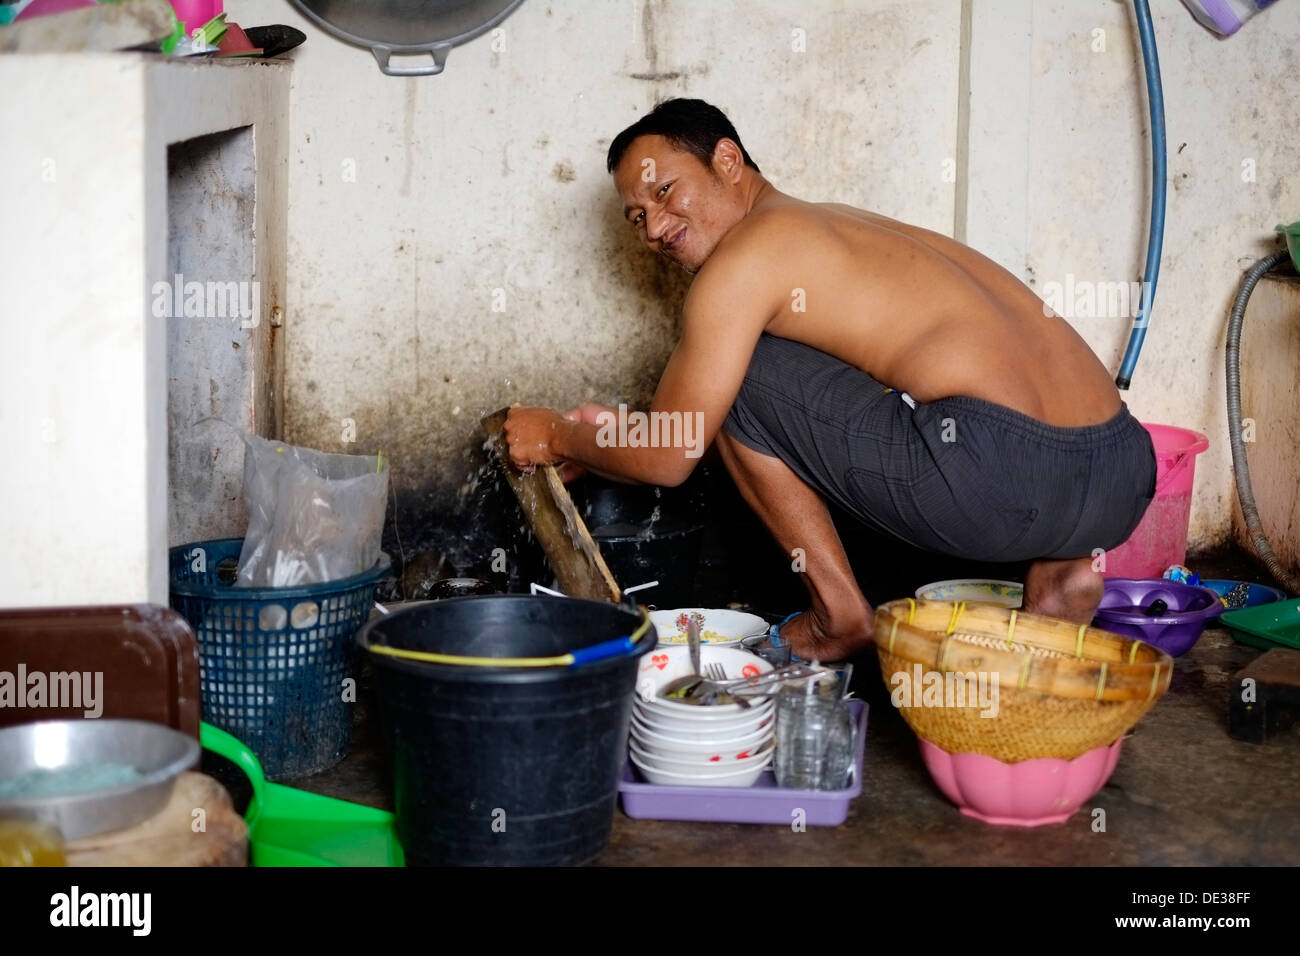 https://c8.alamy.com/comp/DE38FF/smiling-local-man-washing-dishes-in-the-kitchen-of-his-warung-malang-DE38FF.jpg